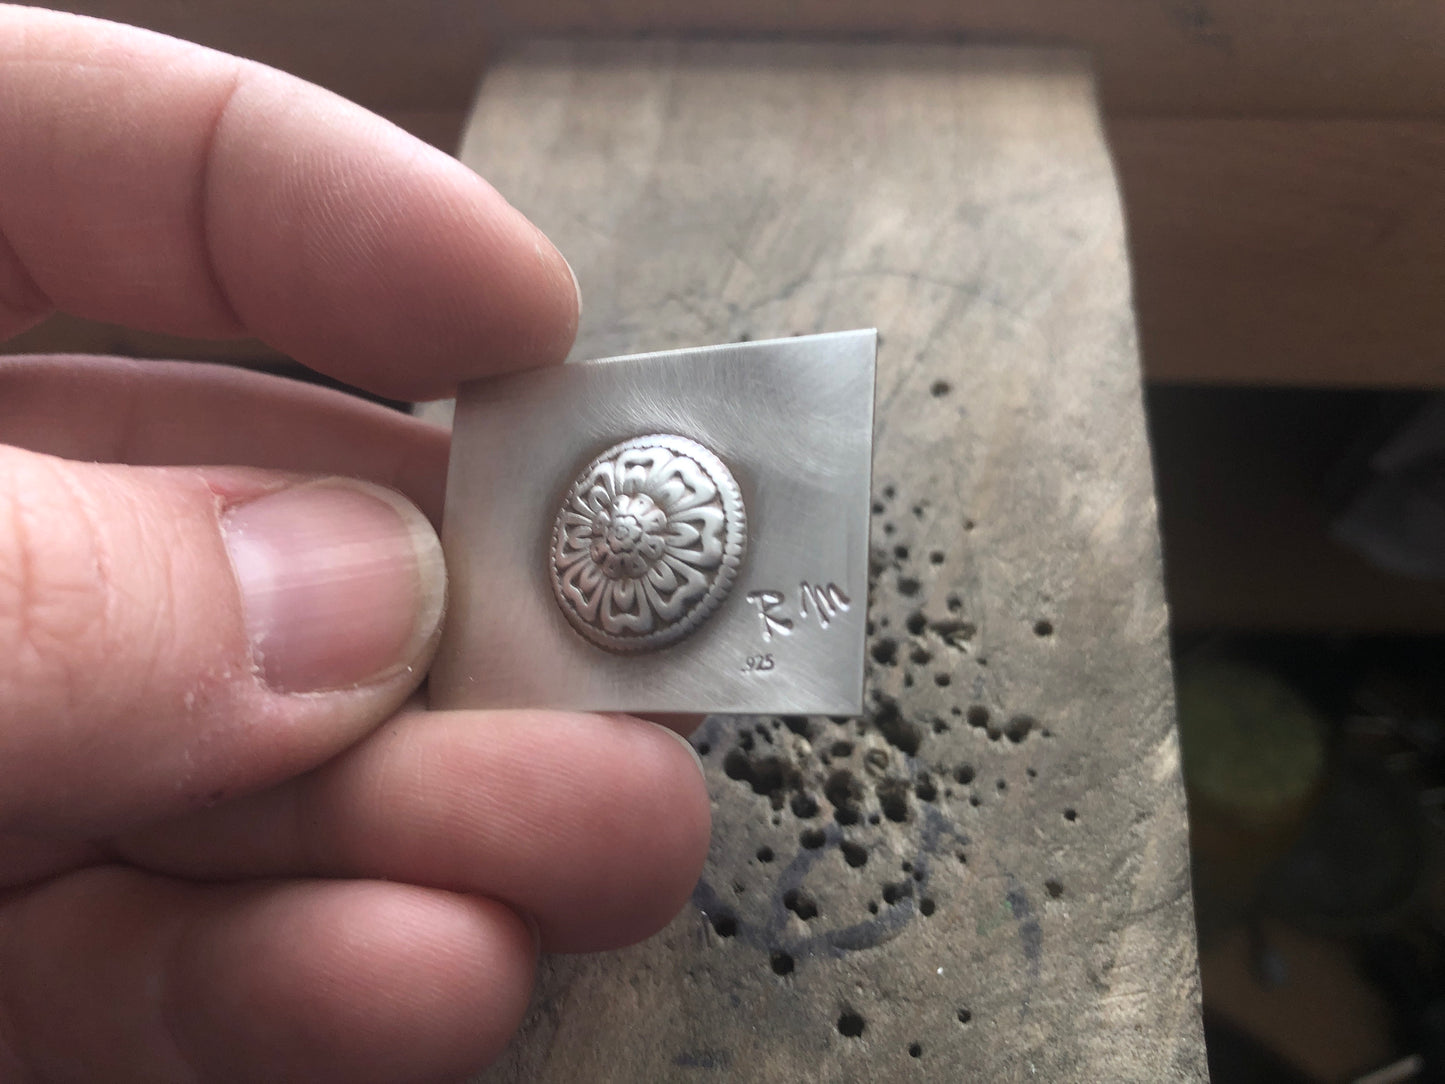 Pressed Metal Round Flower Design Impression for Jewelry Making